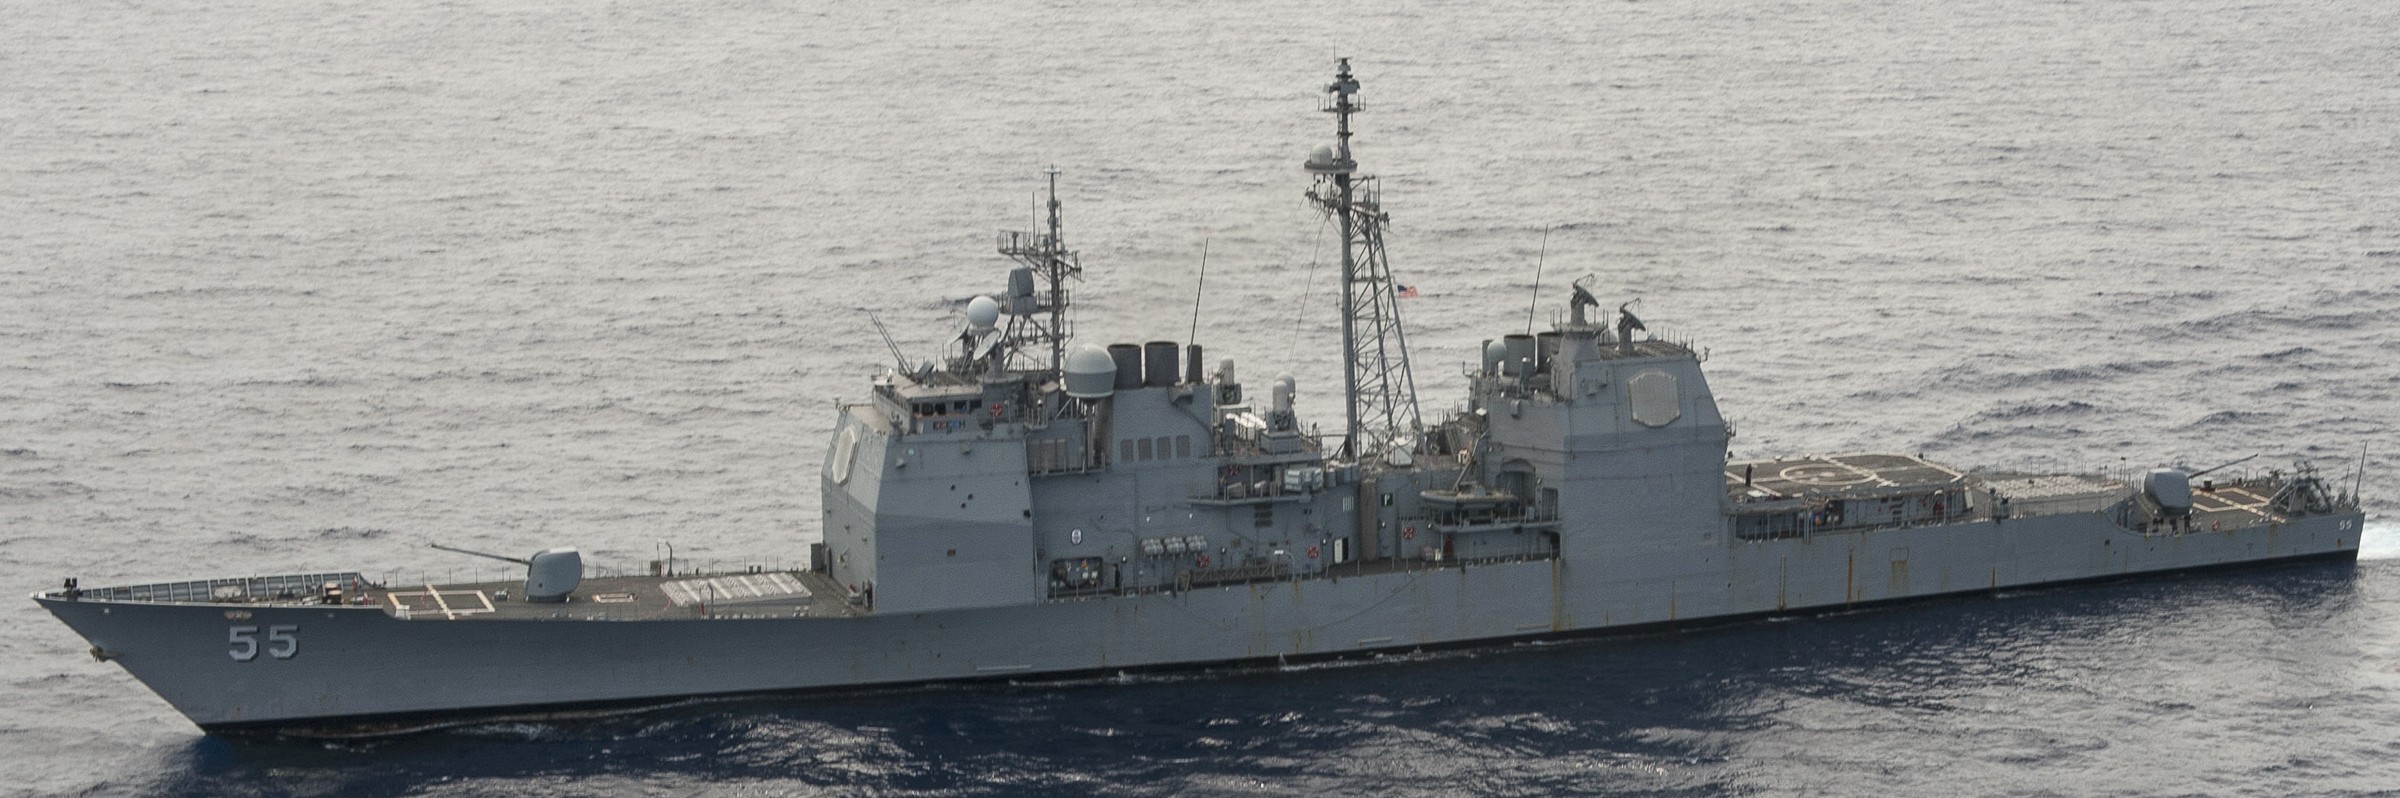 cg-55 uss leyte gulf ticonderoga class guided missile cruiser aegis us navy 43